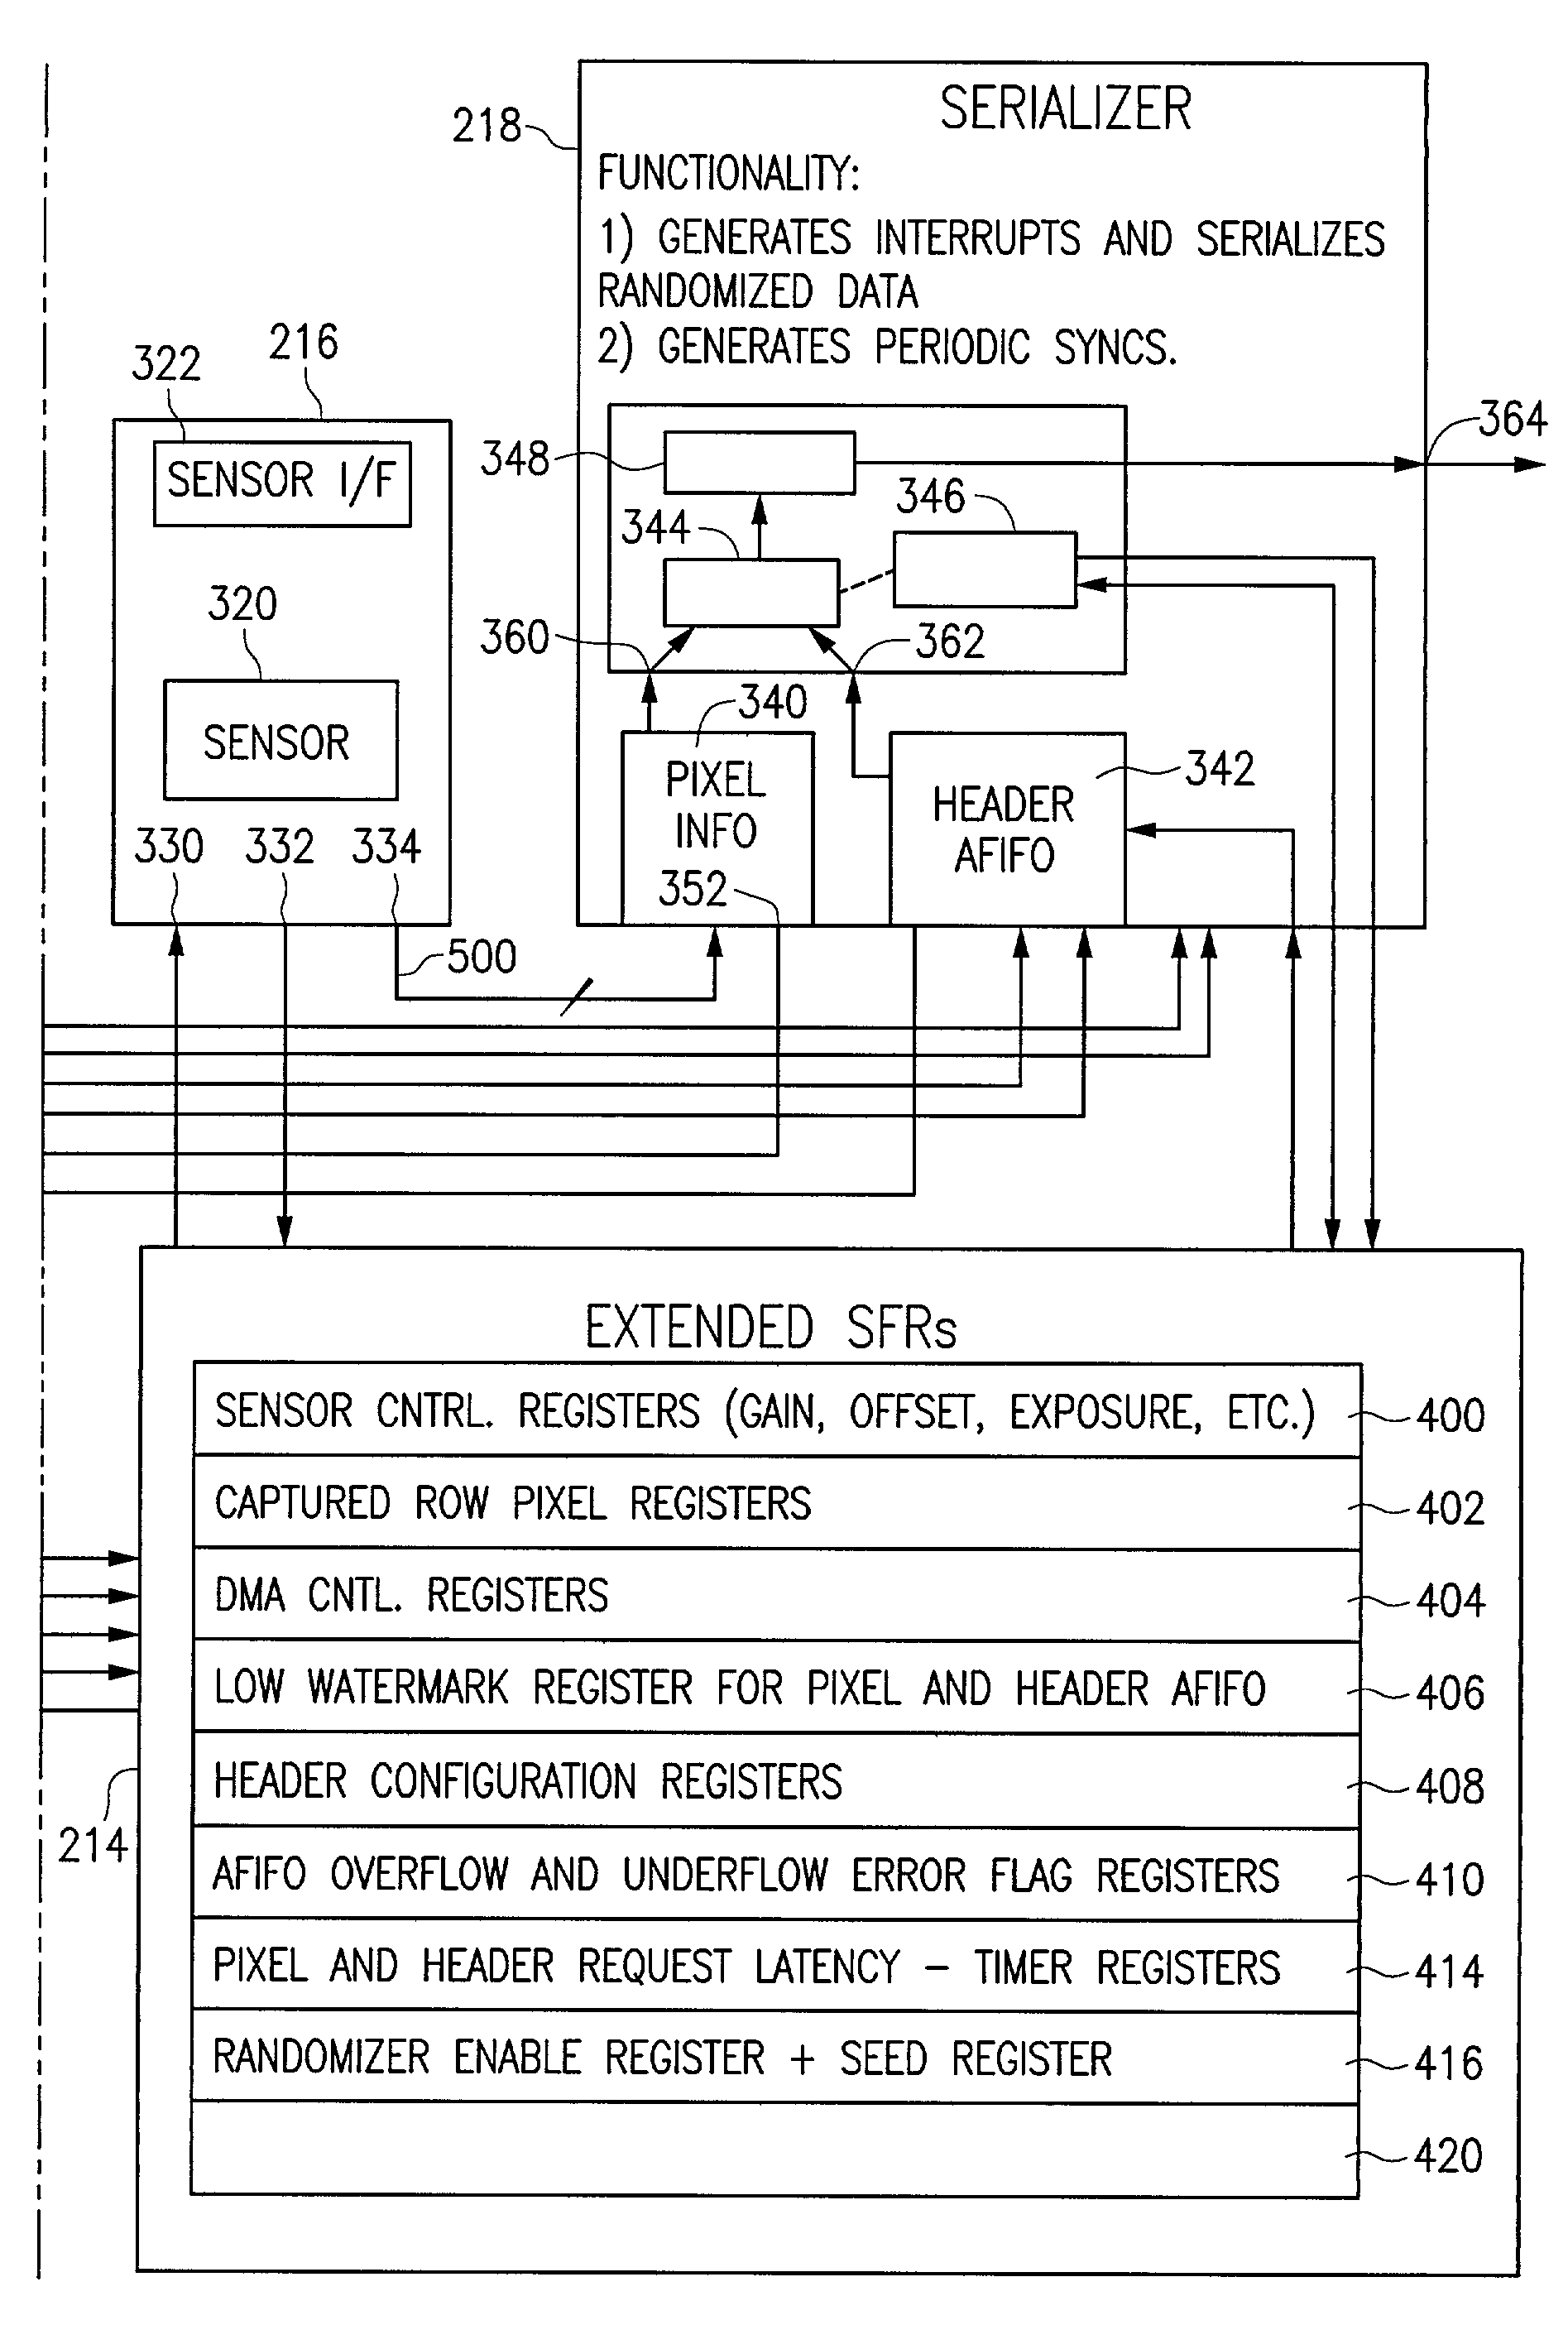 gentex mirror wiring diagram